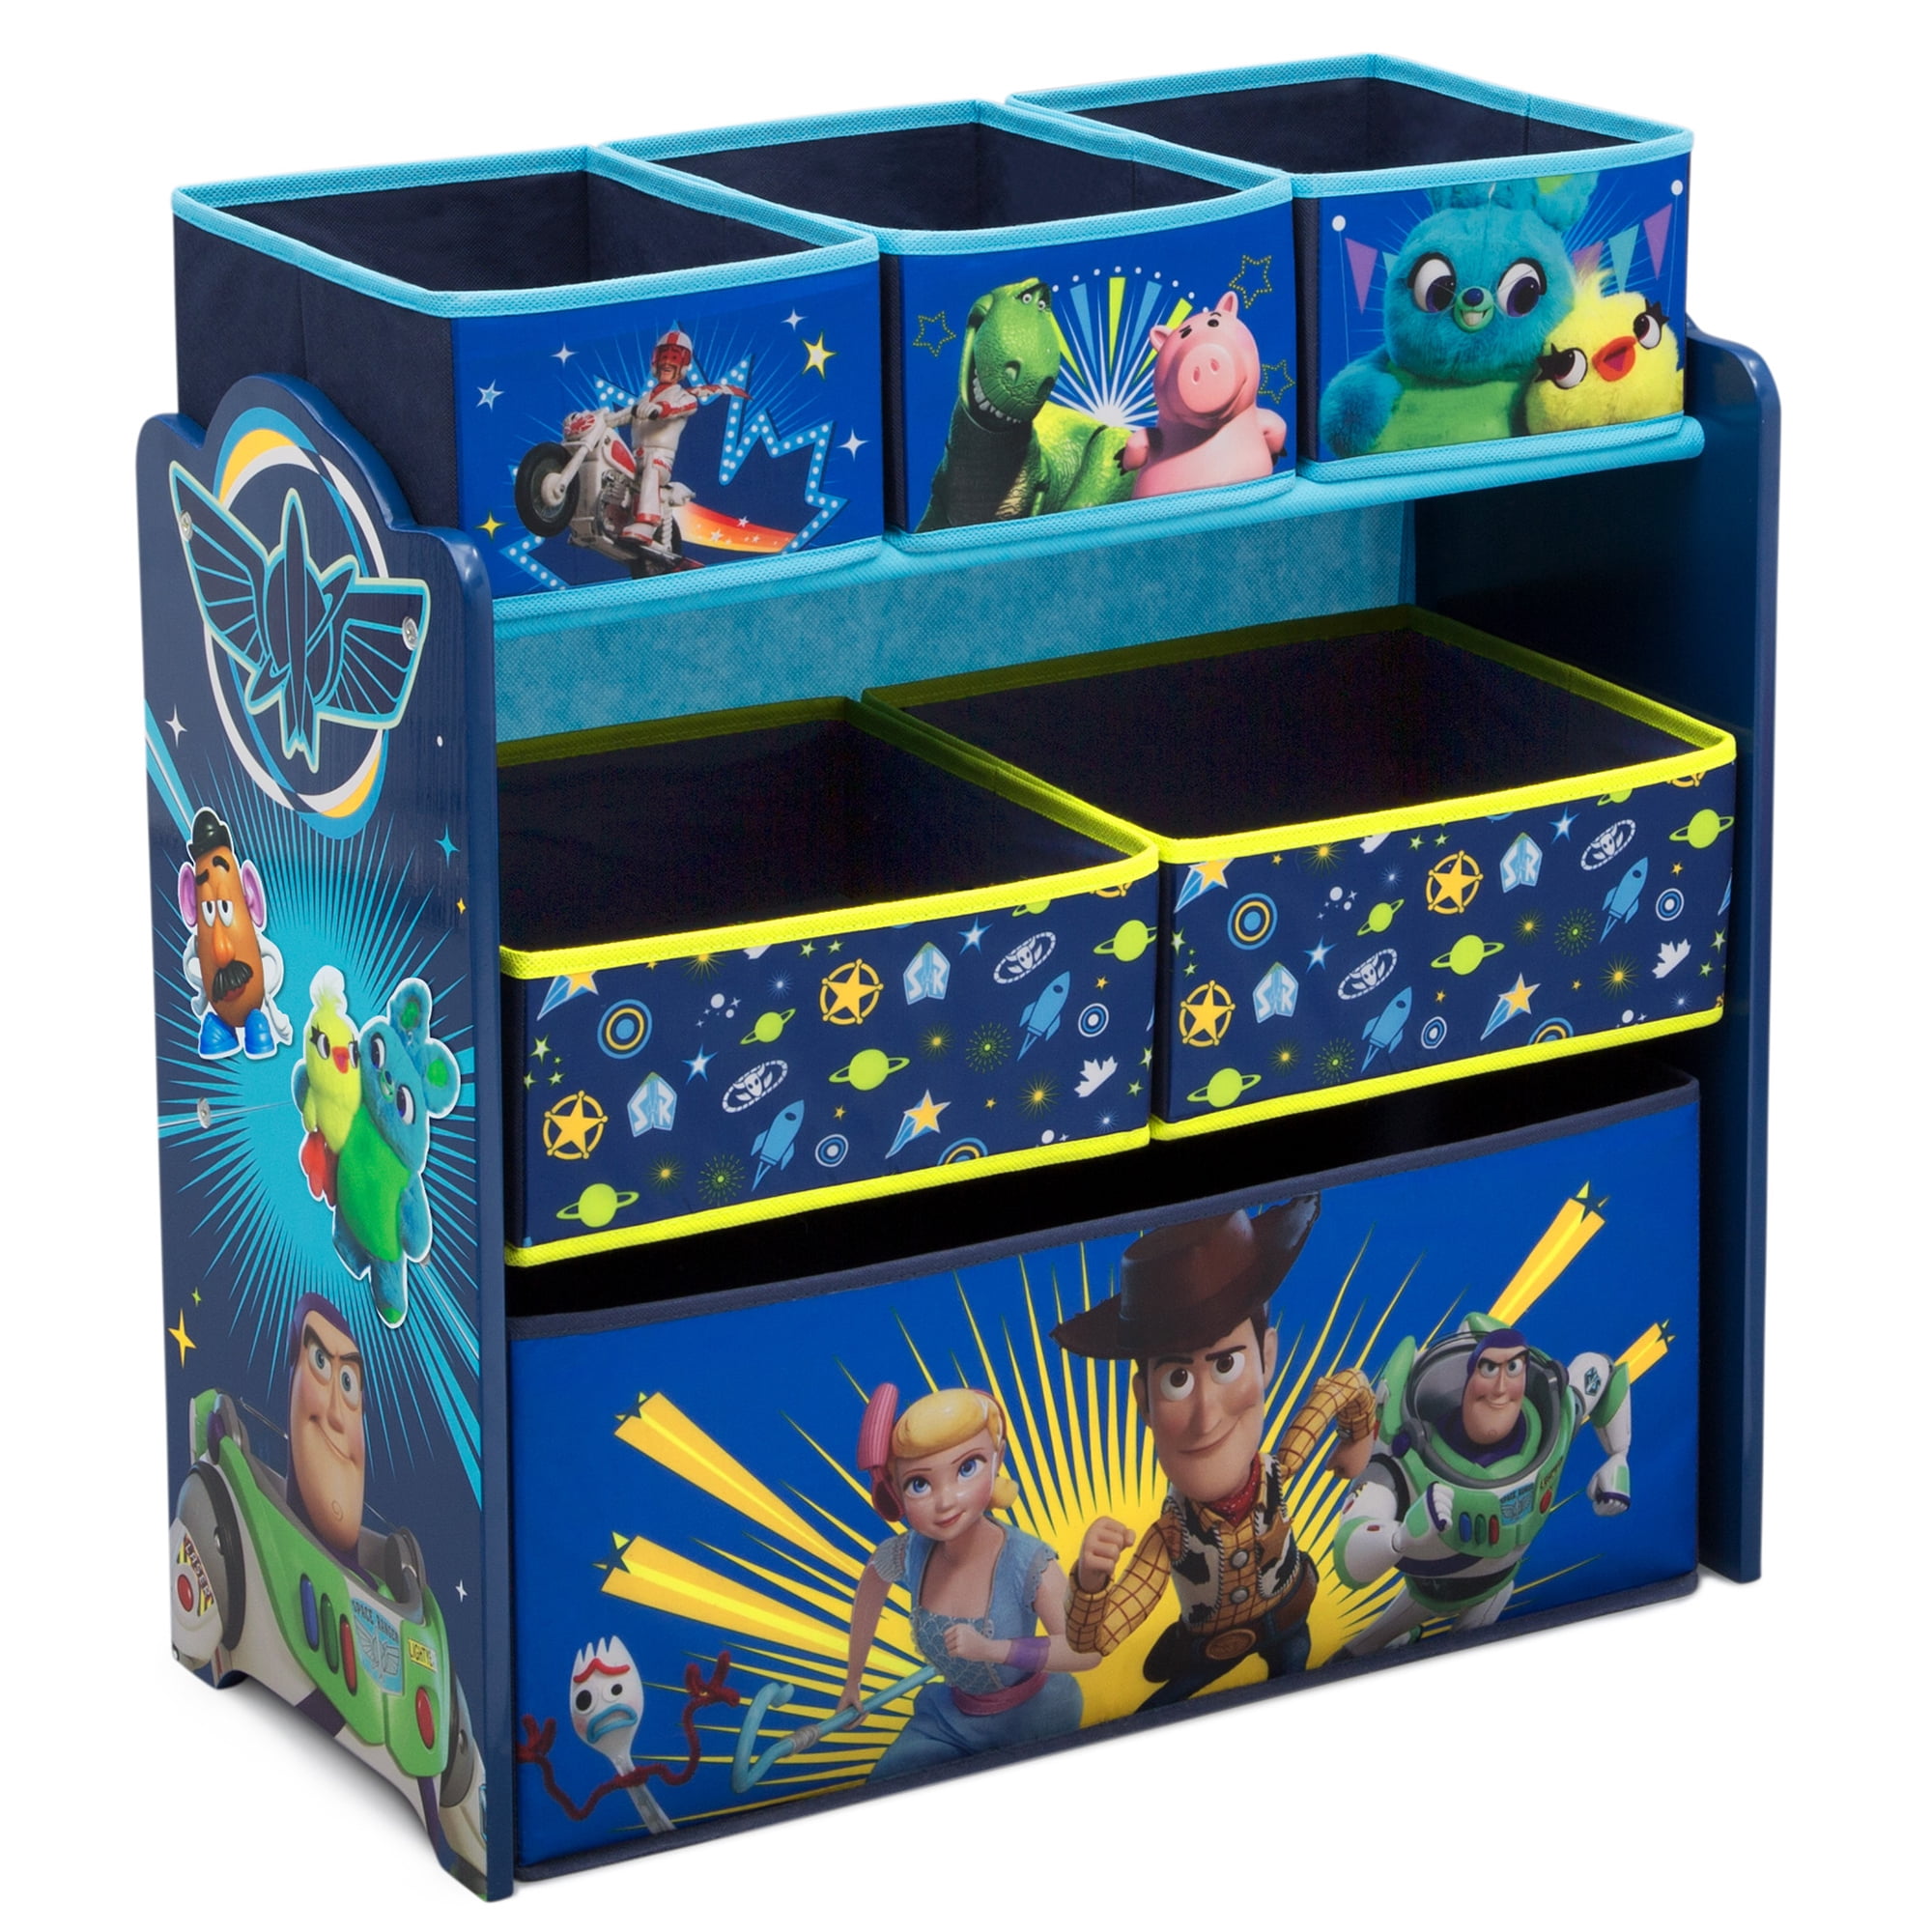 Toy story storage tins 